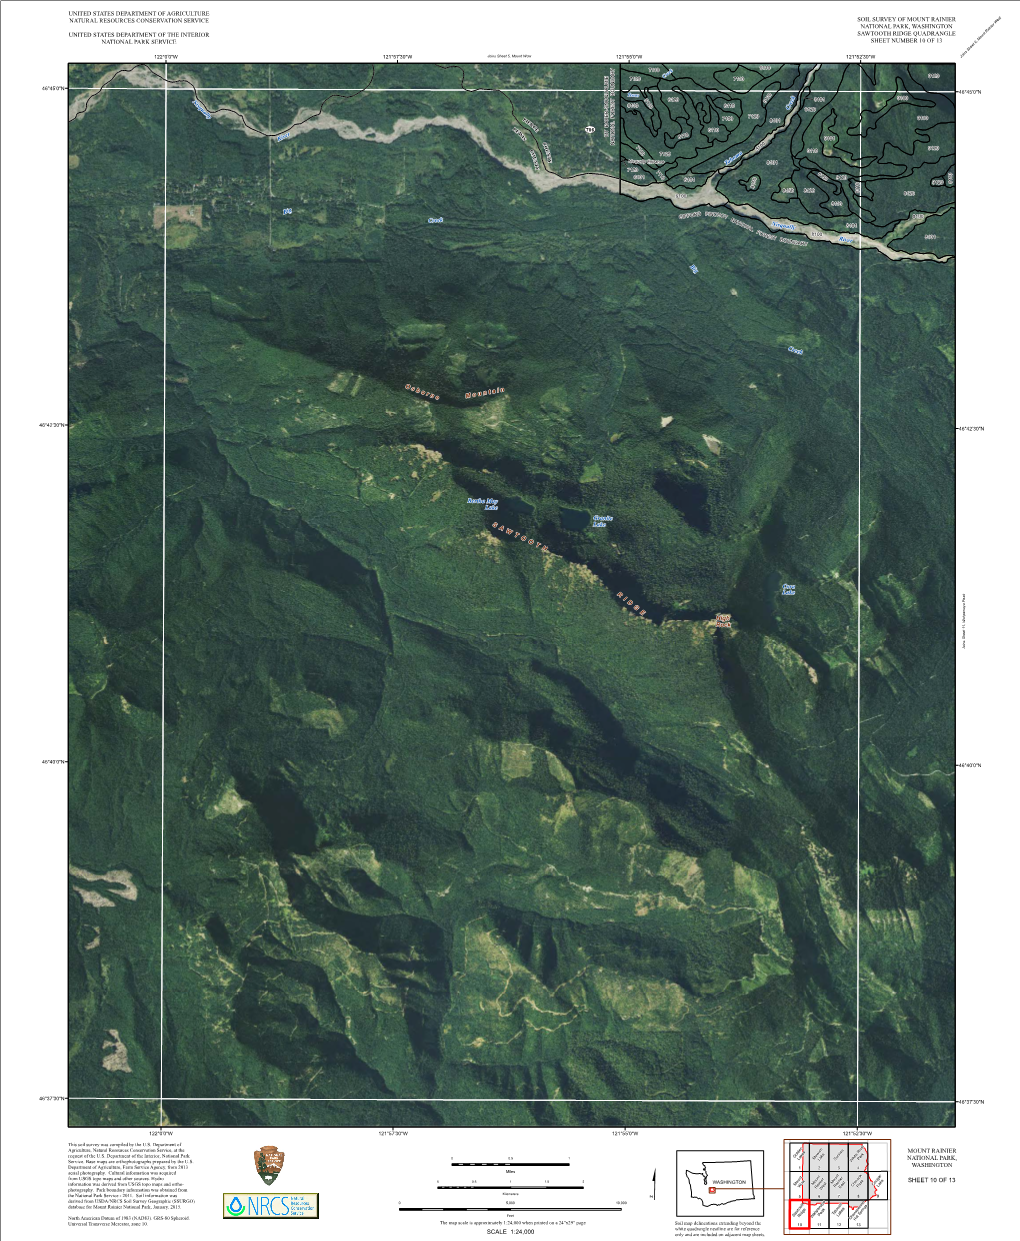 Soil Survey of Mount Rainier National Park, Washington United States Department of the Interior Sawtooth Ridge Quadrangle National Park Service Sheet Number 10 of 13